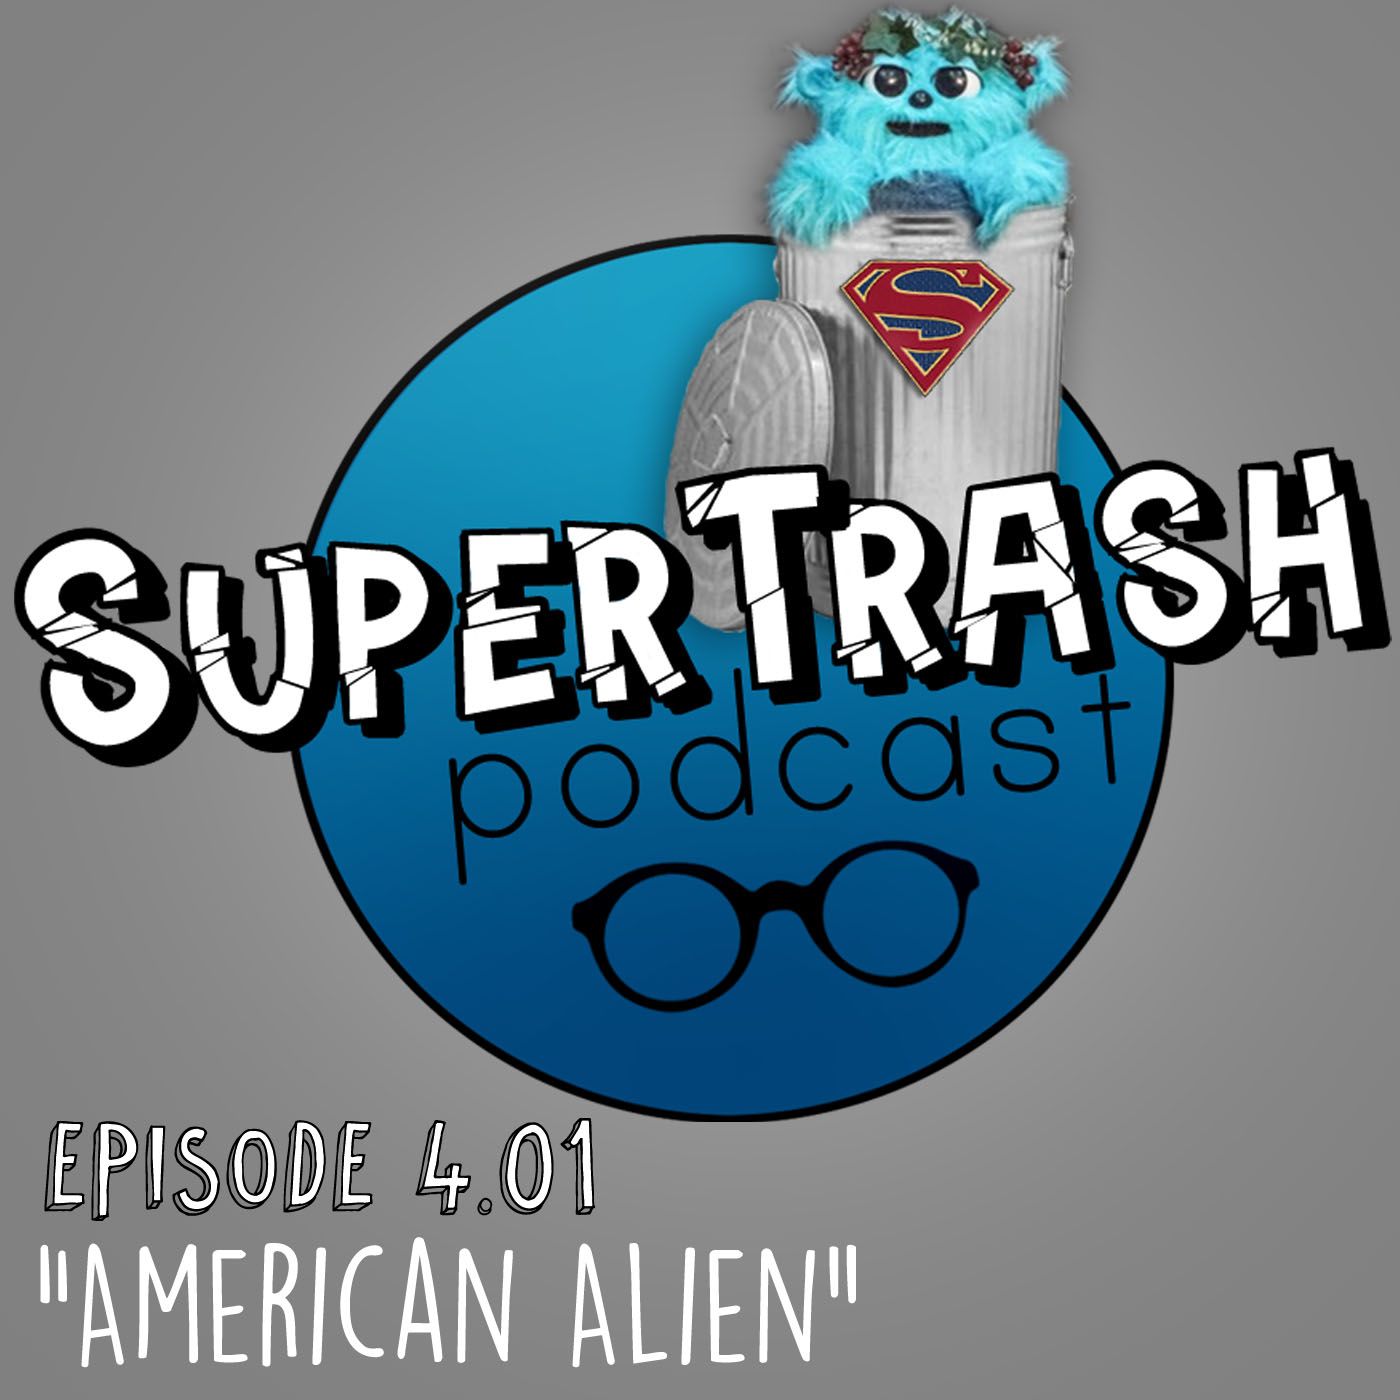 ’Supergirl’ Episode 4.01: ”American Aliens”